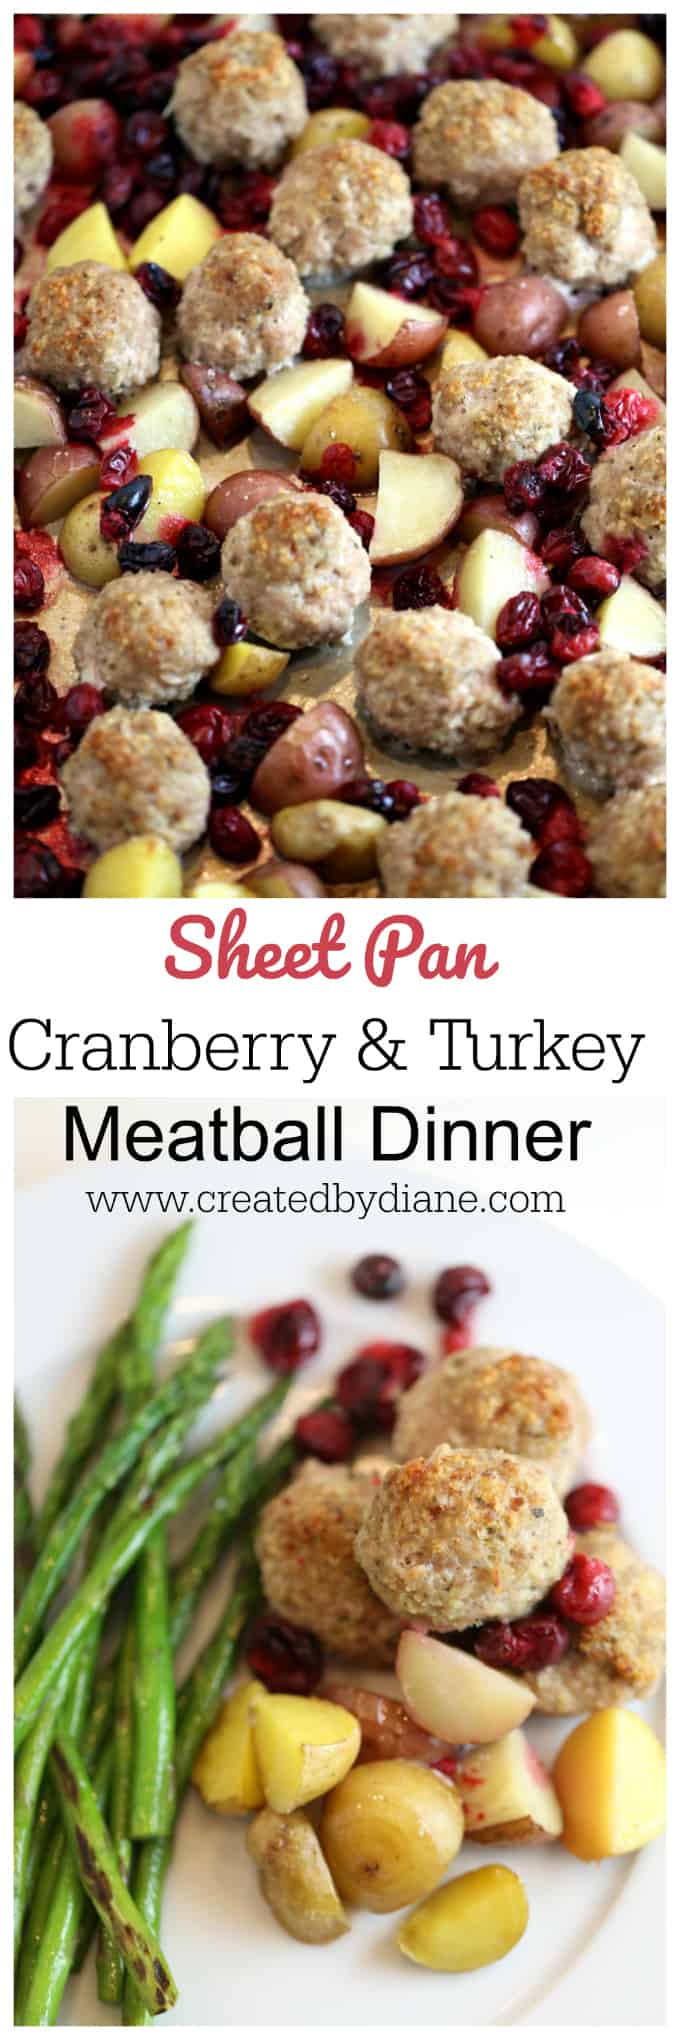 cranberry turkey meatball dinner with potatoes www.createdbydiane.com